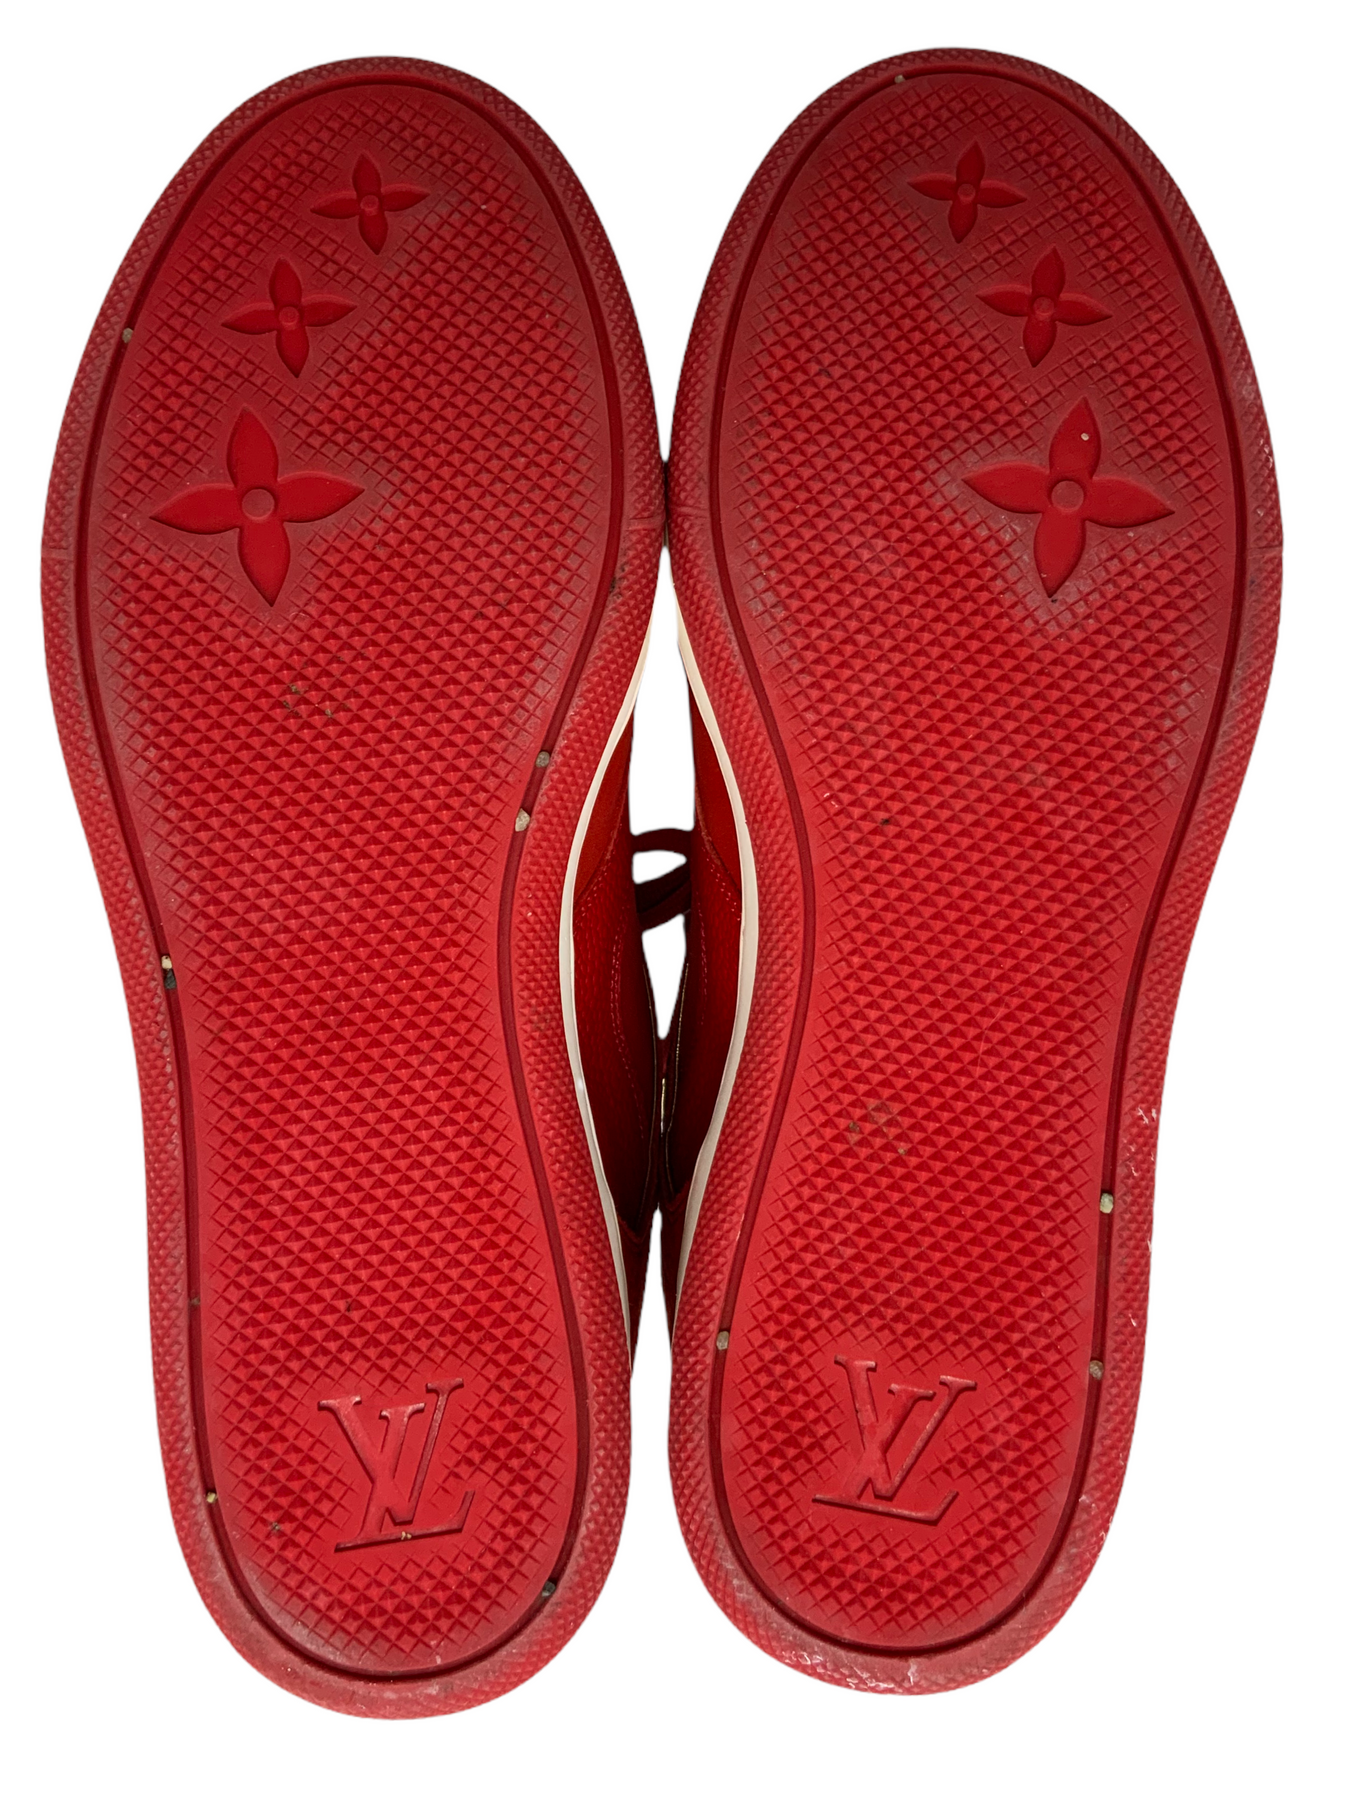 Louis Vuitton Embossed Monogram Suede Cliff Top Wedge Sneakers Size 7